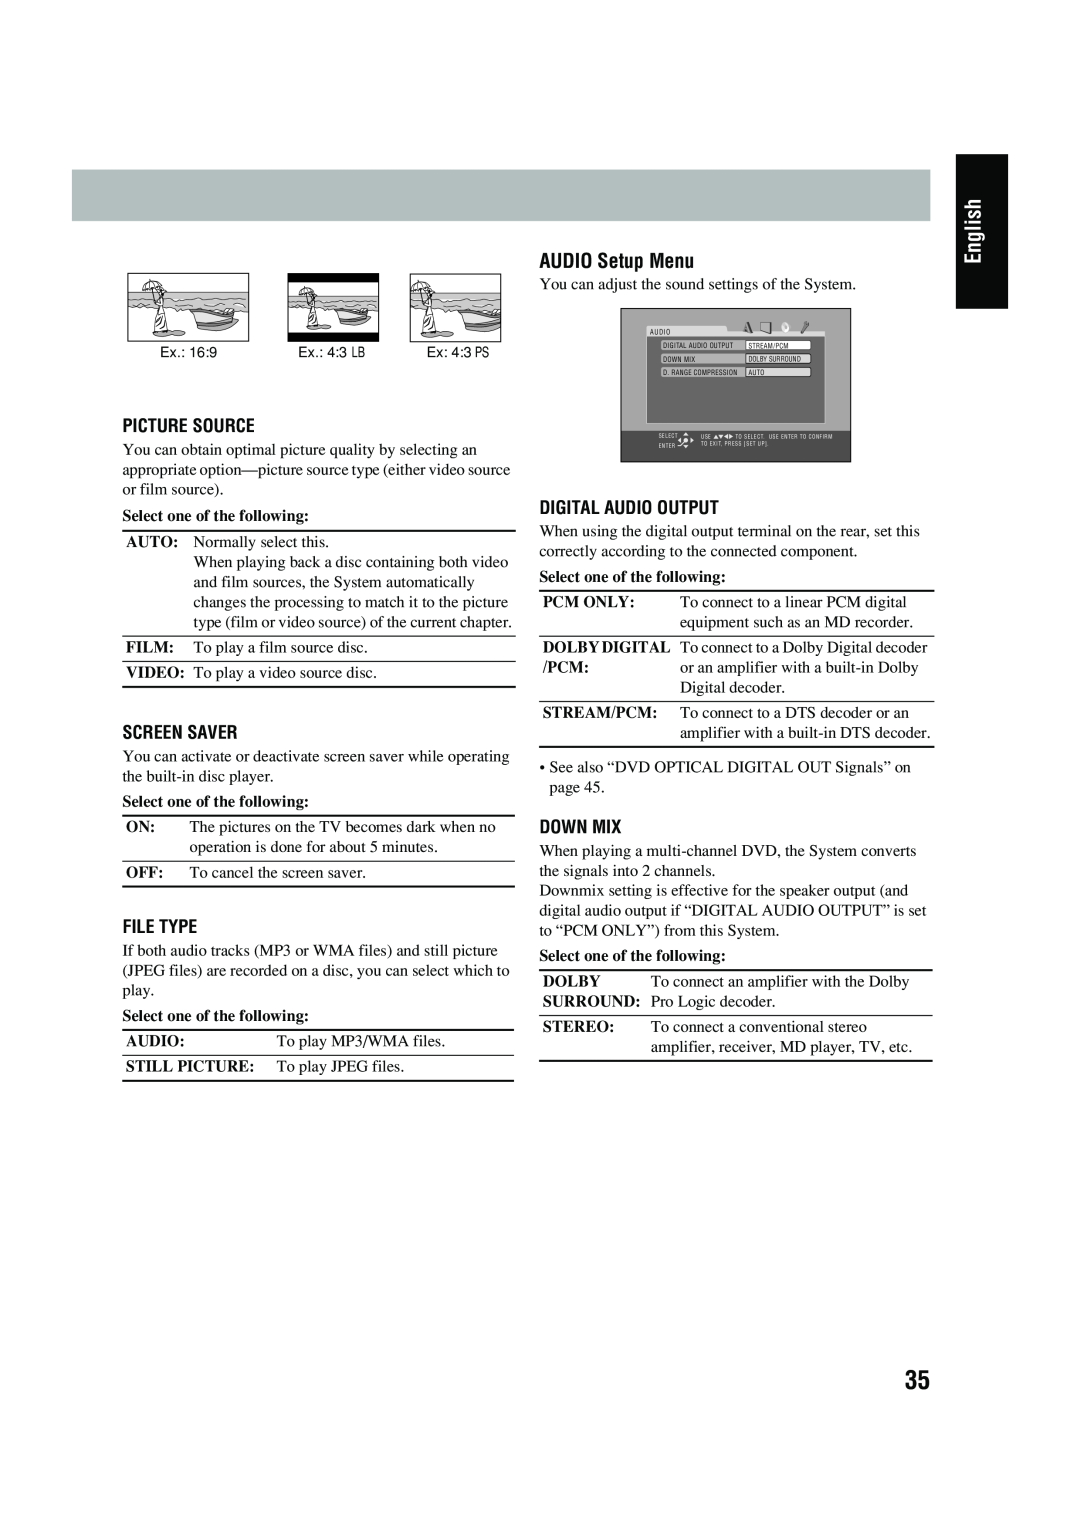 JVC UX-P450 manual AUDIO Setup Menu, Picture Source, Screen Saver, File Type, Digital Audio Output, Down Mix, English 